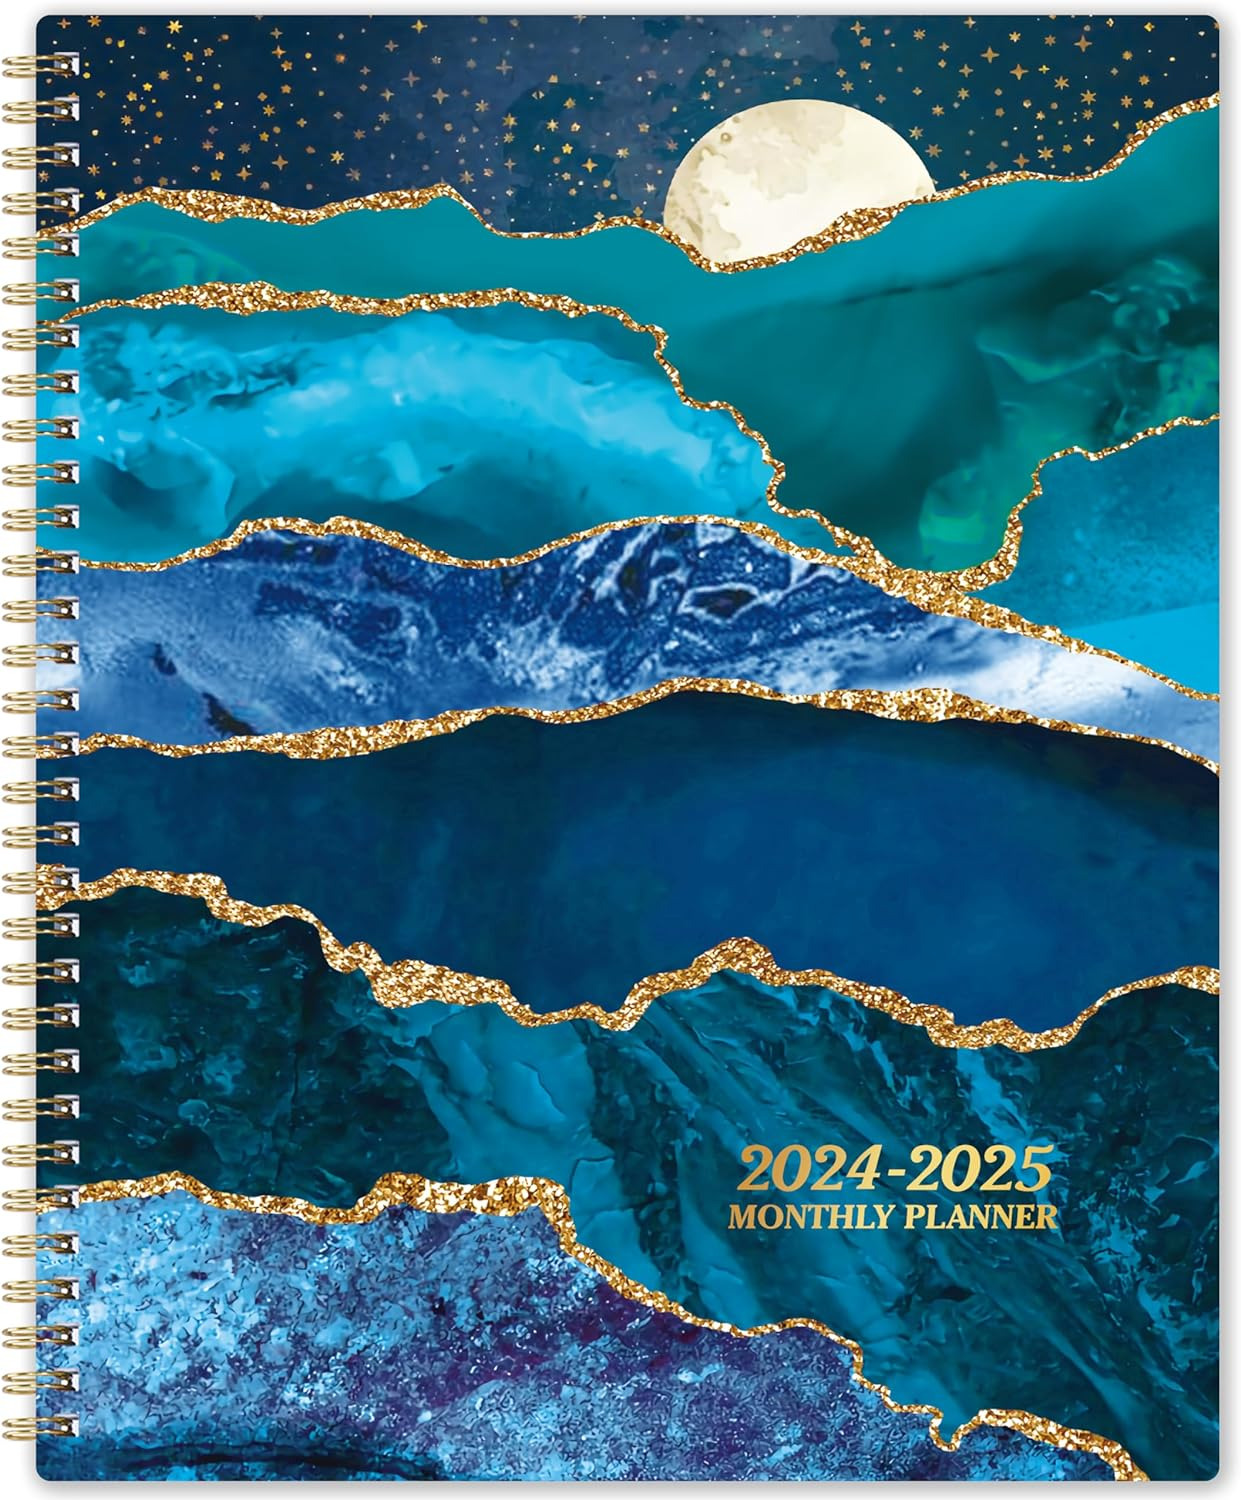 2024-2025 Monthly Planner/Calendar 2 Year Monthly Jan 2024 - Dec 2025 9\